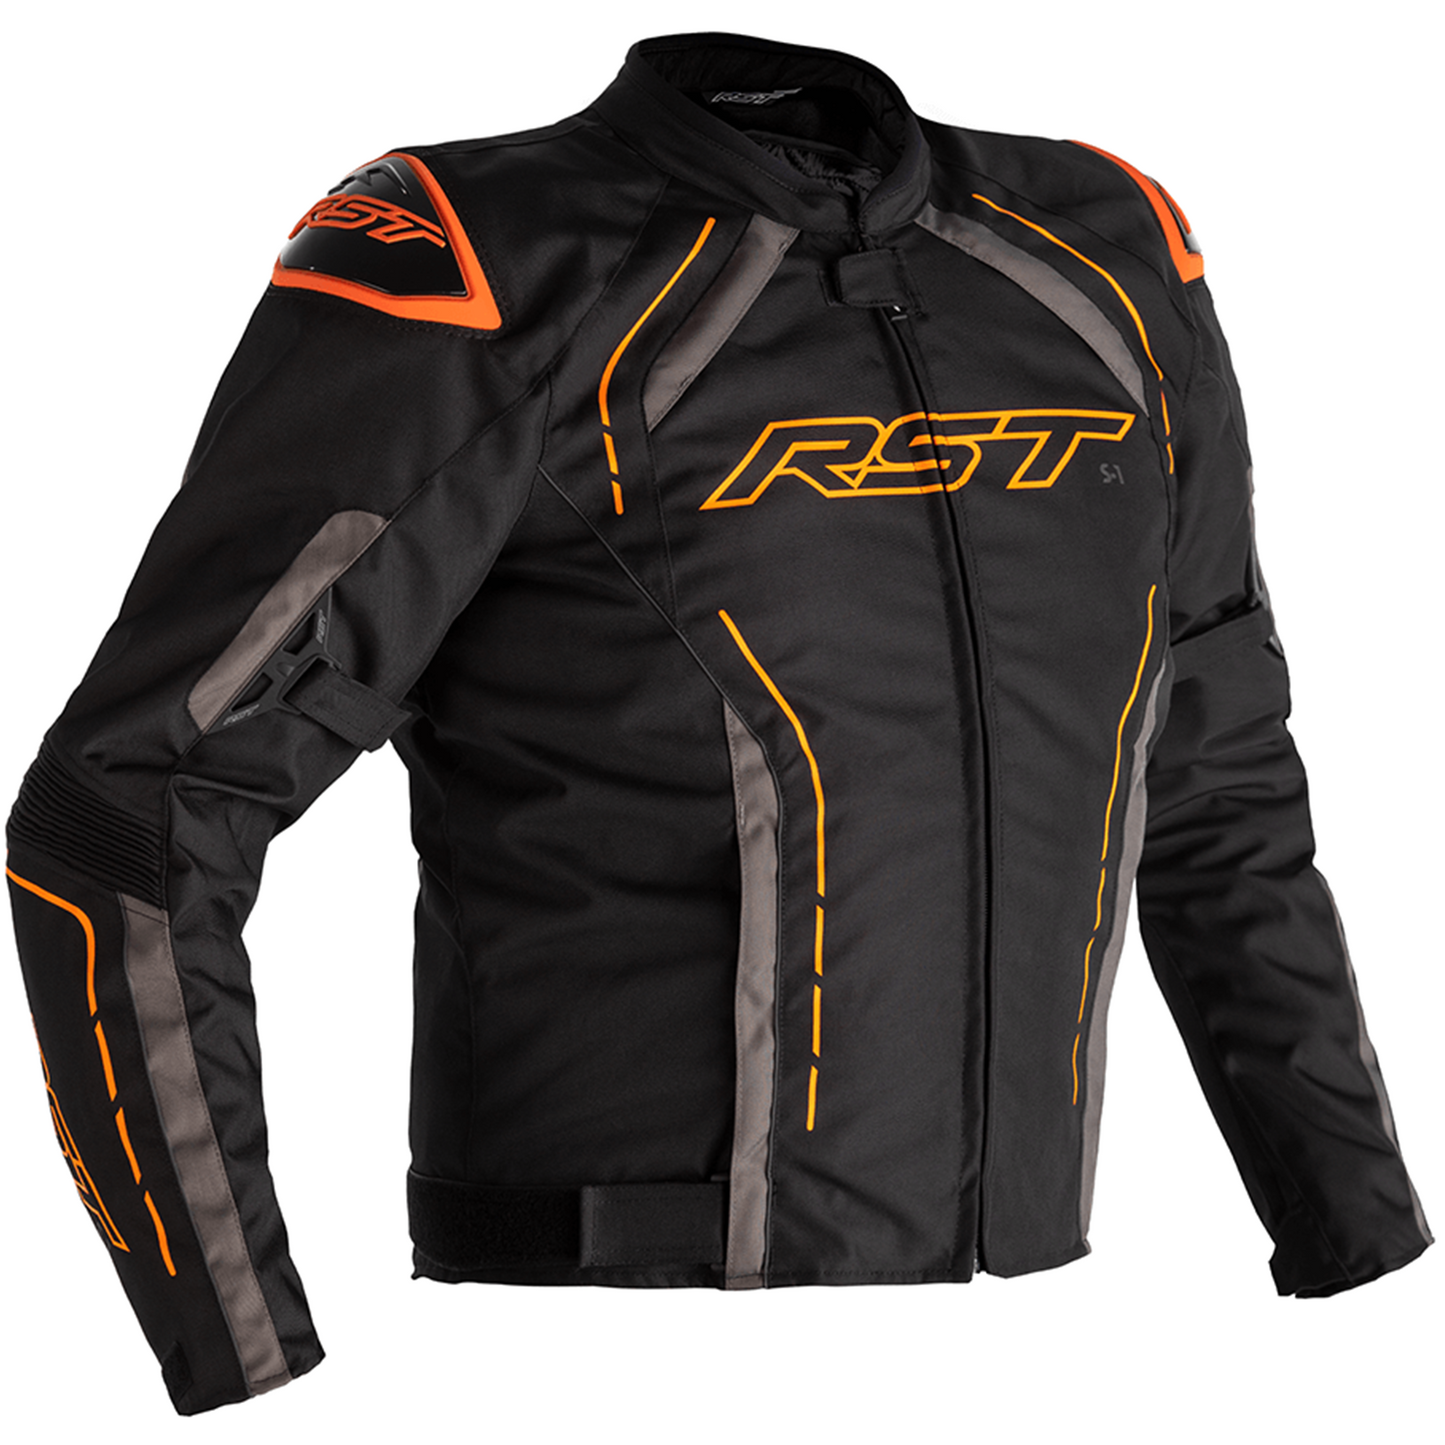 RST S1 (CE) Textile Jacket - Neon Orange (2559)